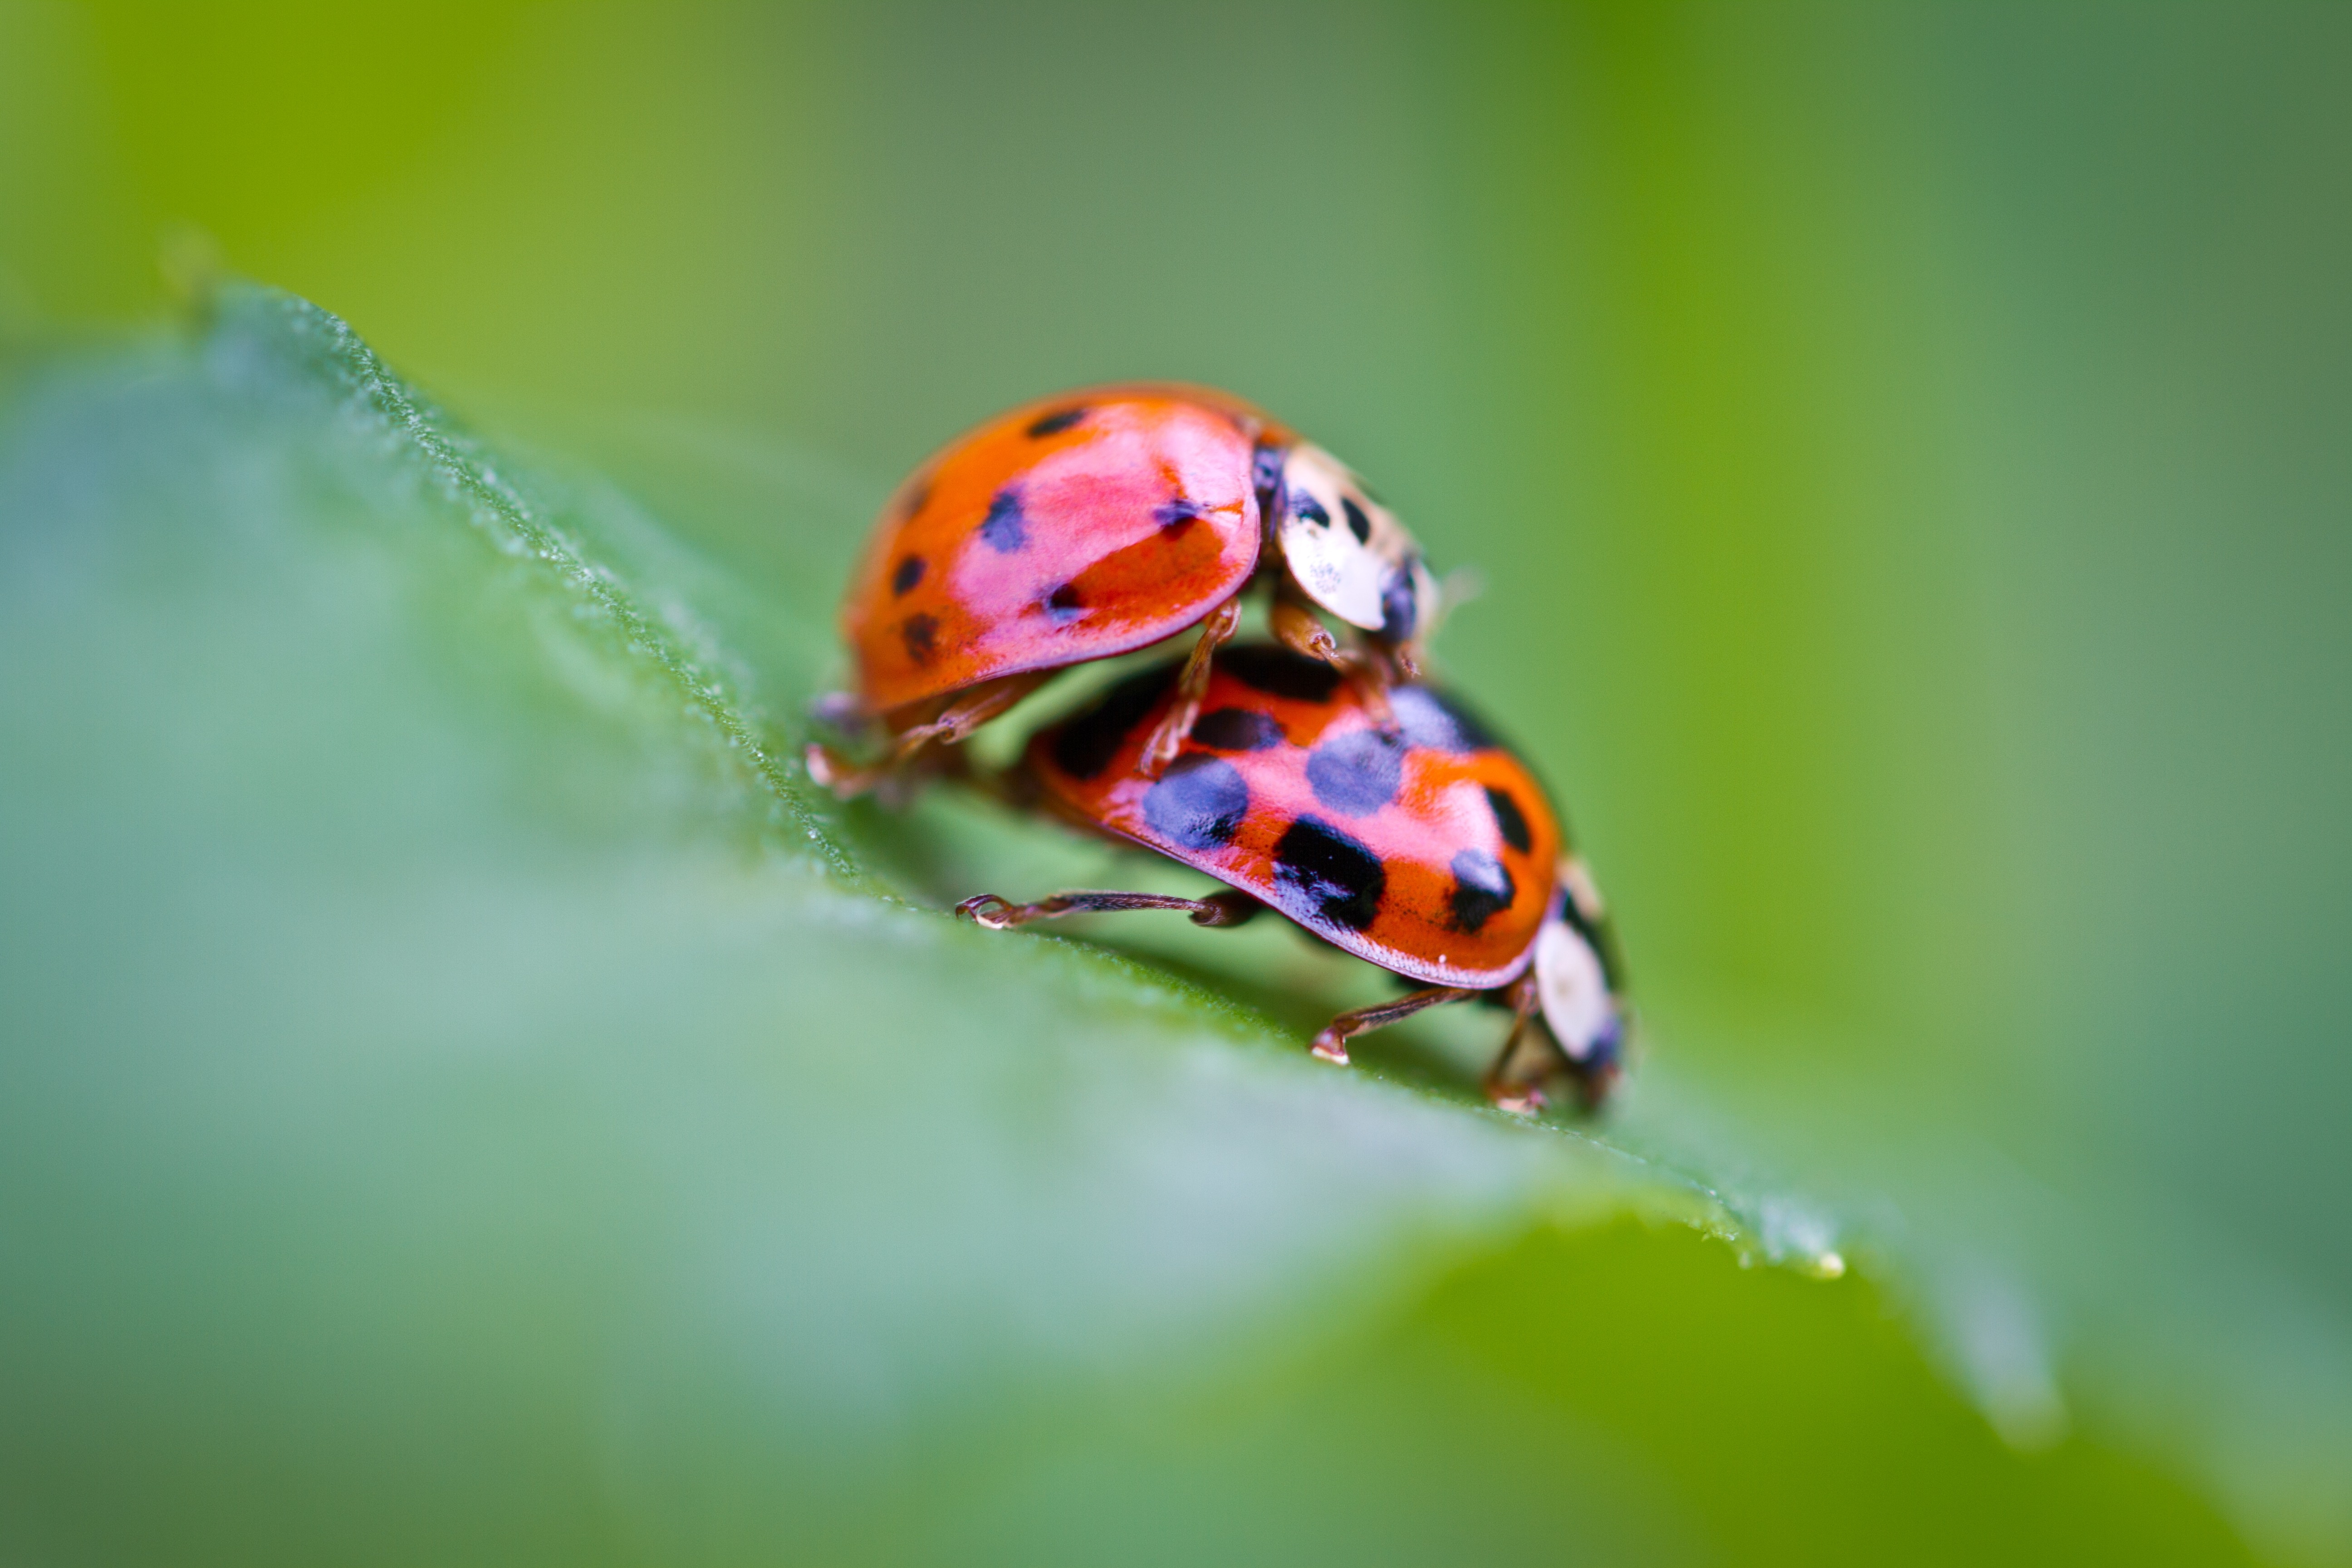 2 spotted ladybugs beetle